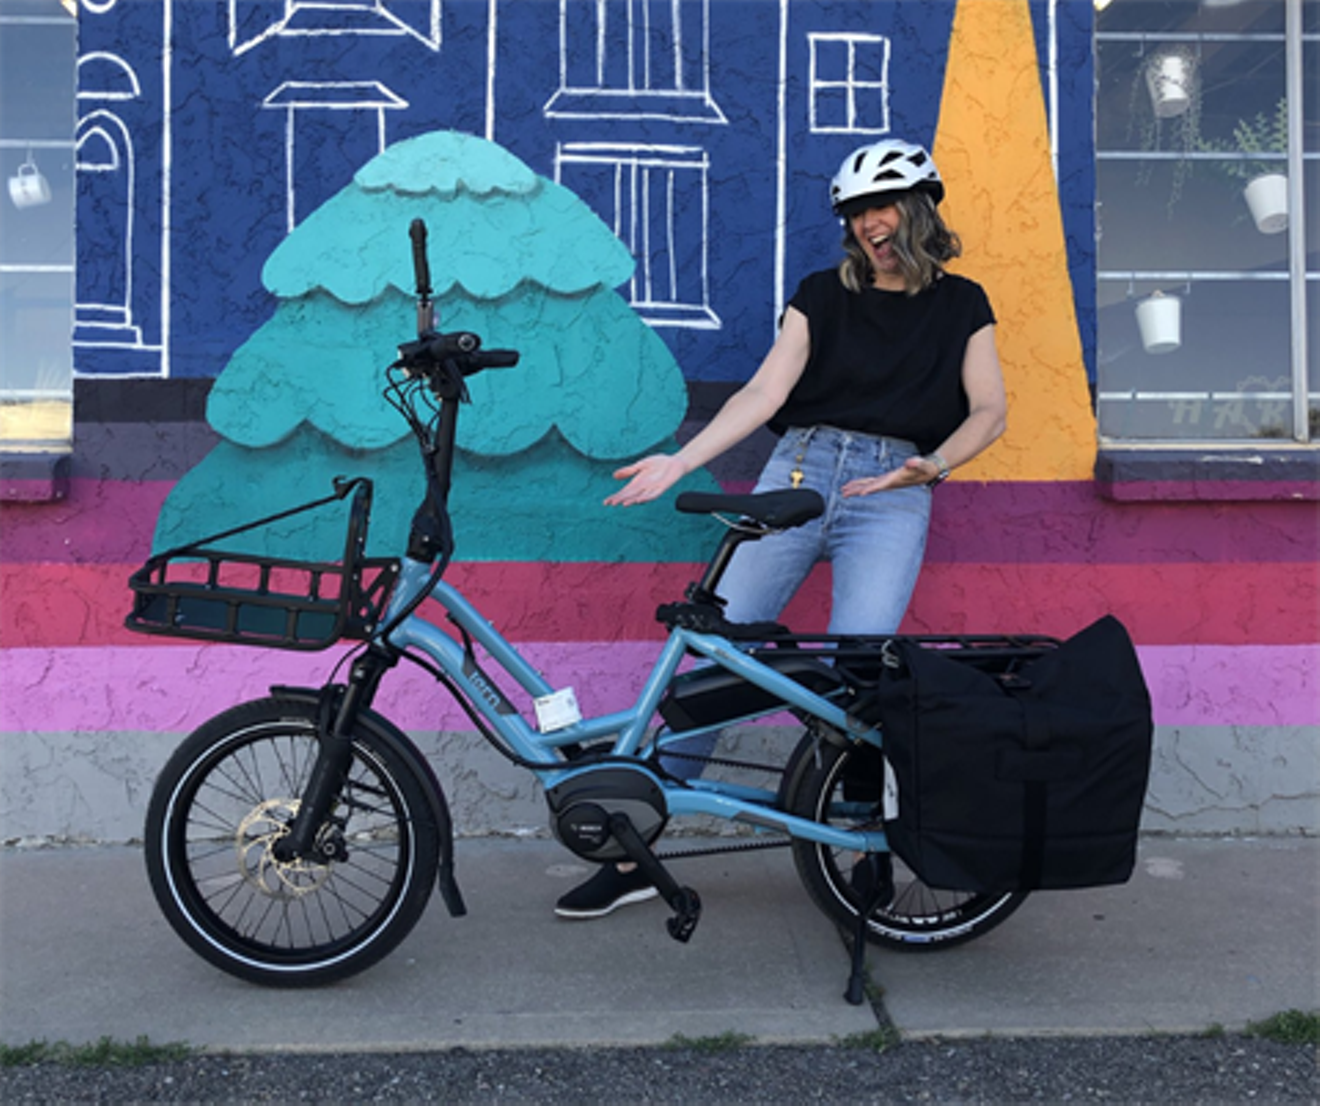 new-york-e-bike-rebate-how-to-apply